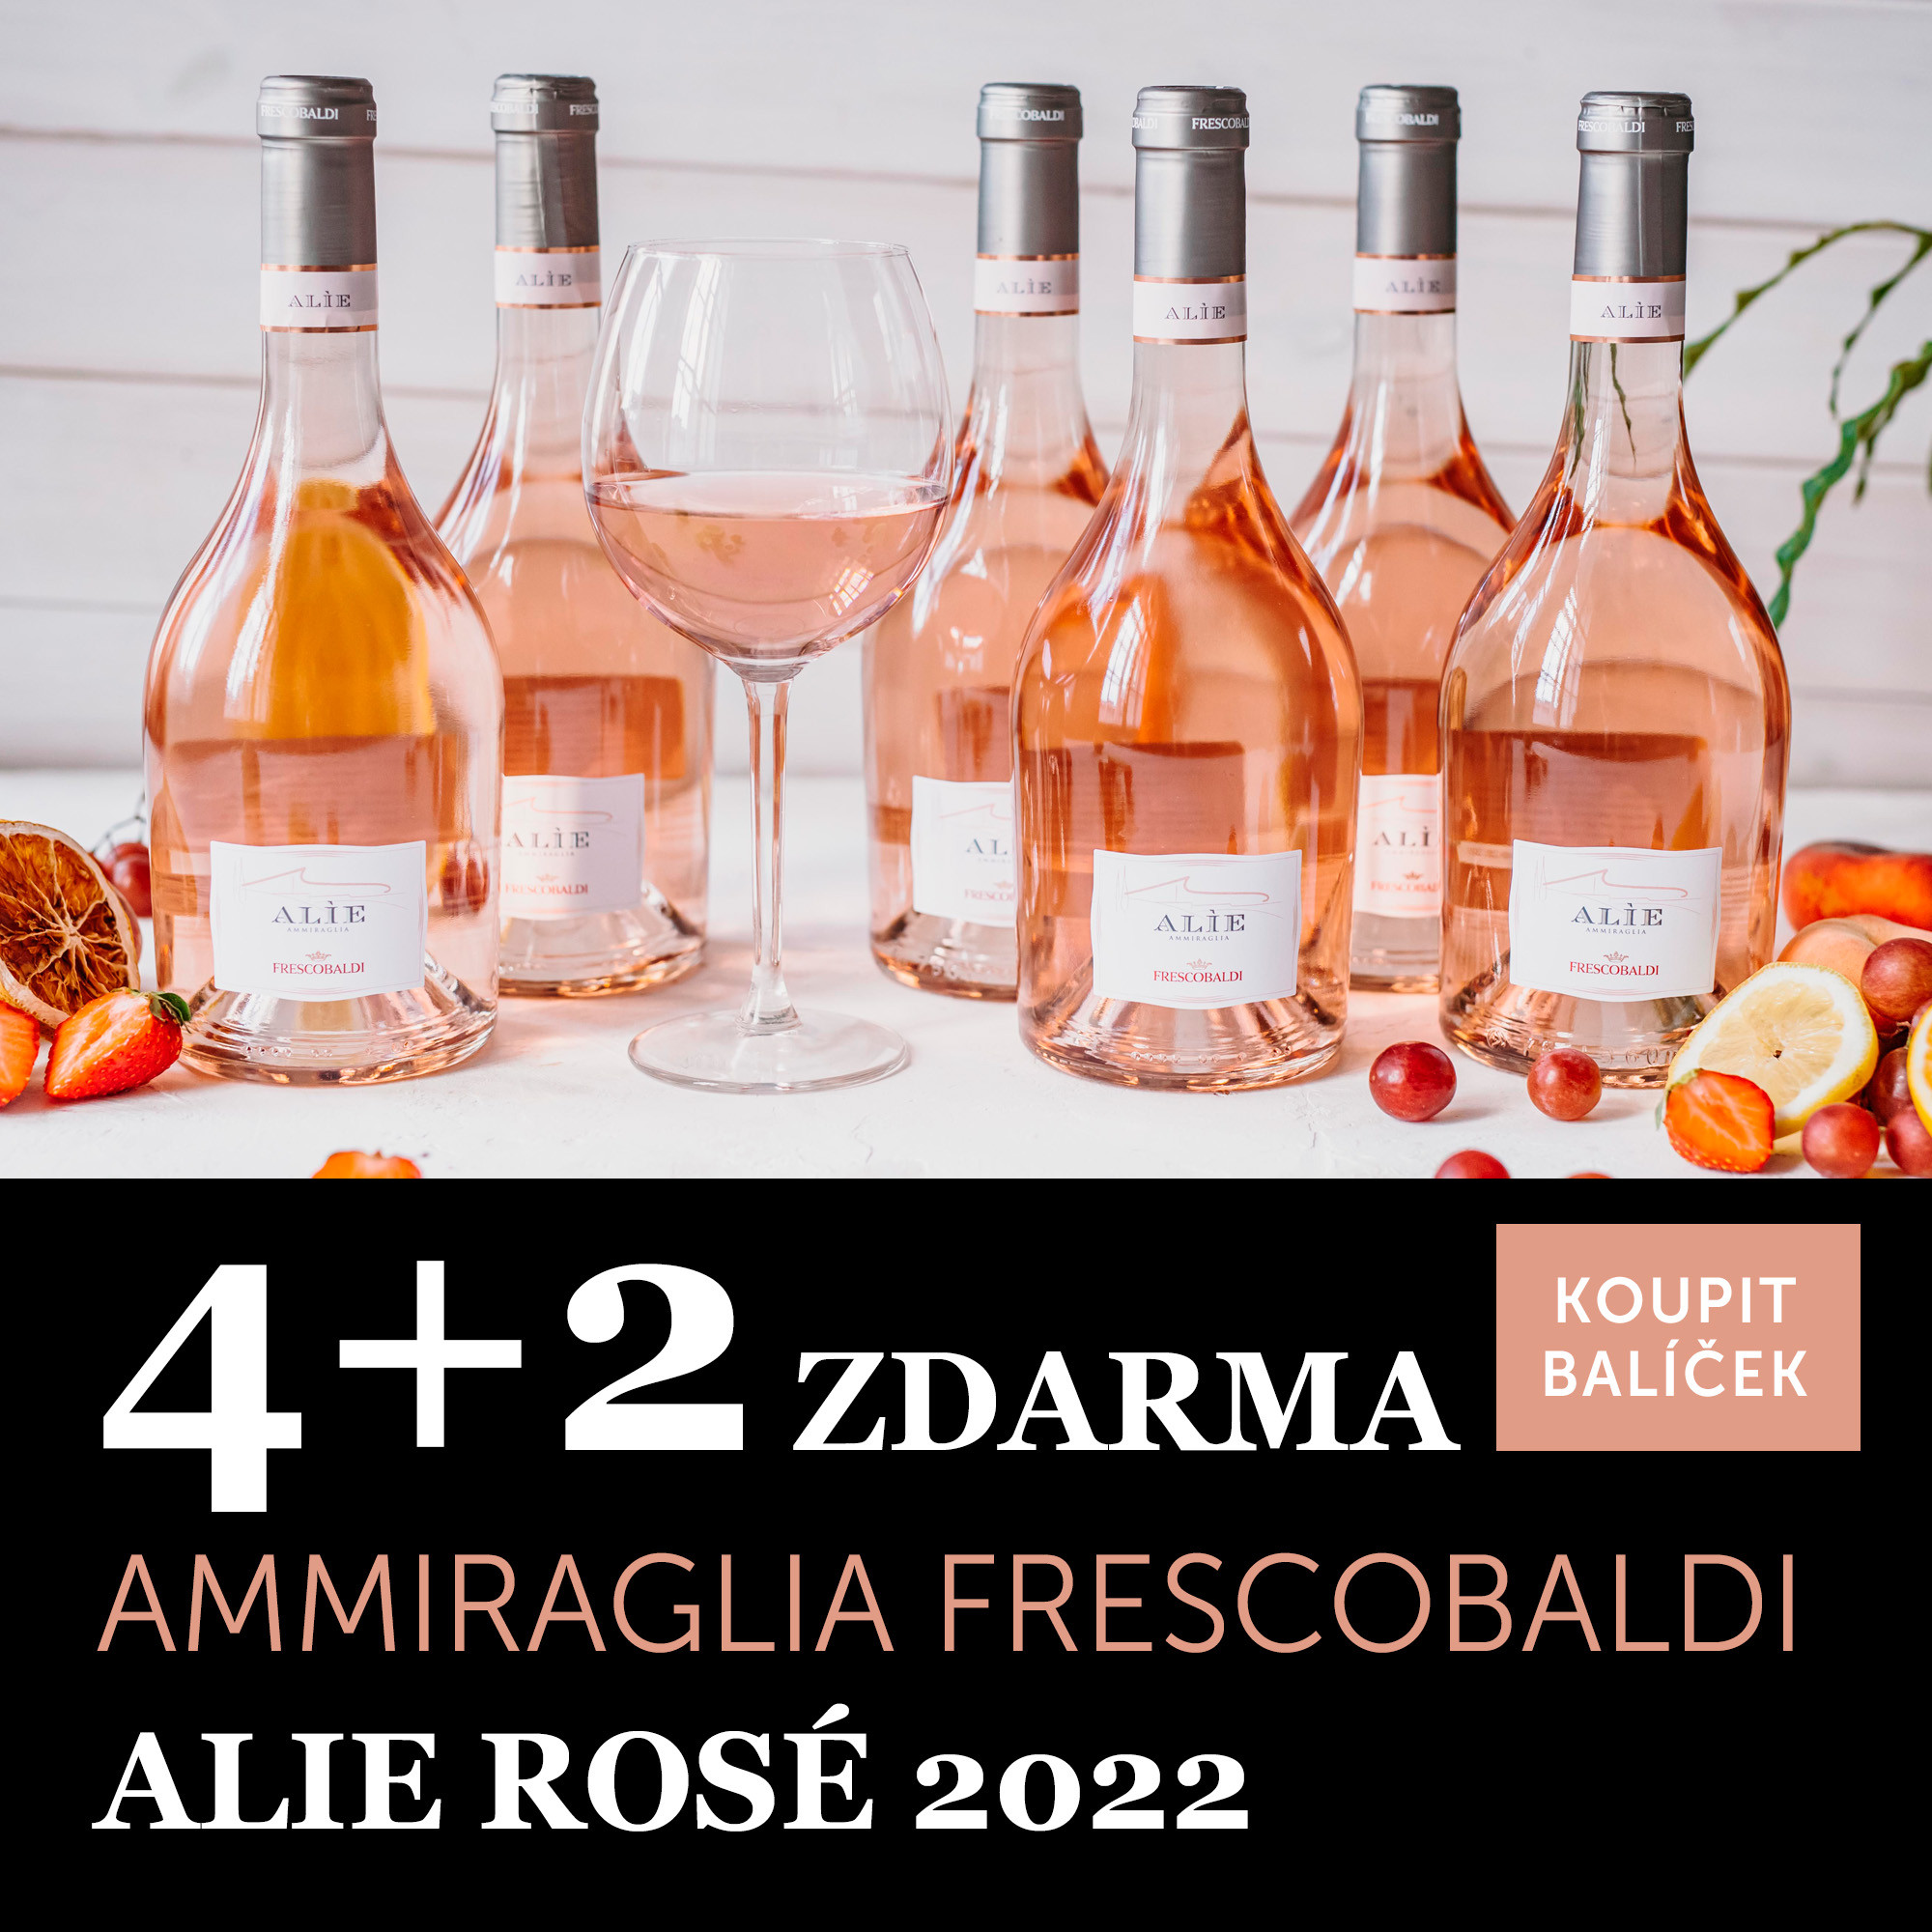 Alie rosé IGT 2022 Ammiraglia 4+2 zdarma - UKONČENO